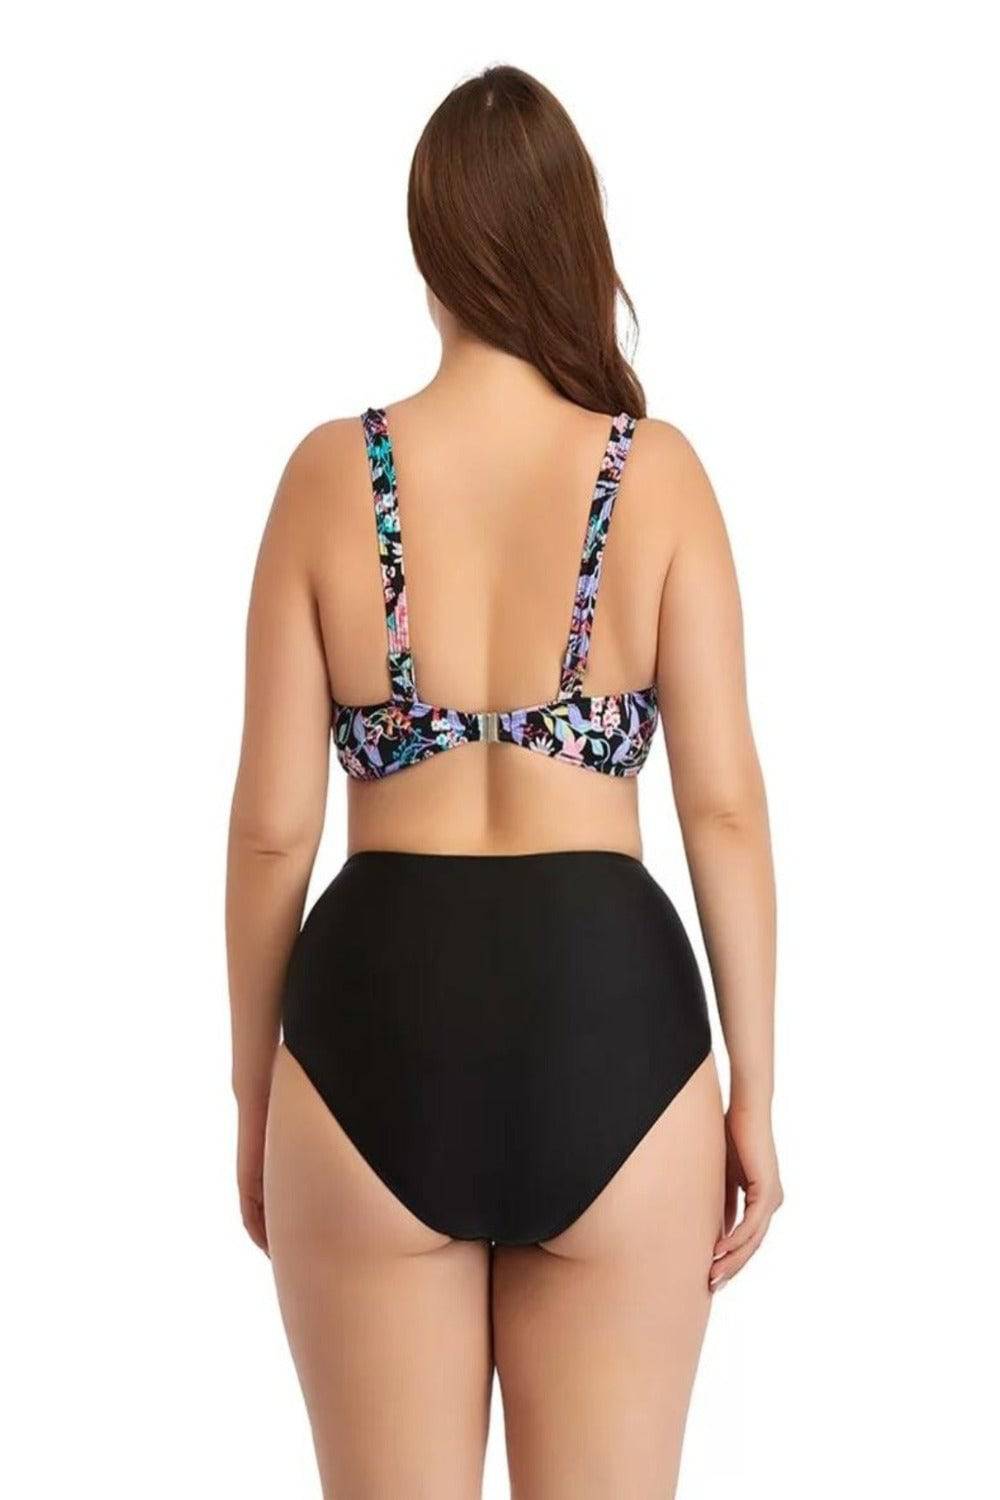 Plus Size Women Halter Bikini Set Push Up Bra High Waist Swimwear Swimsuit  Beachwear